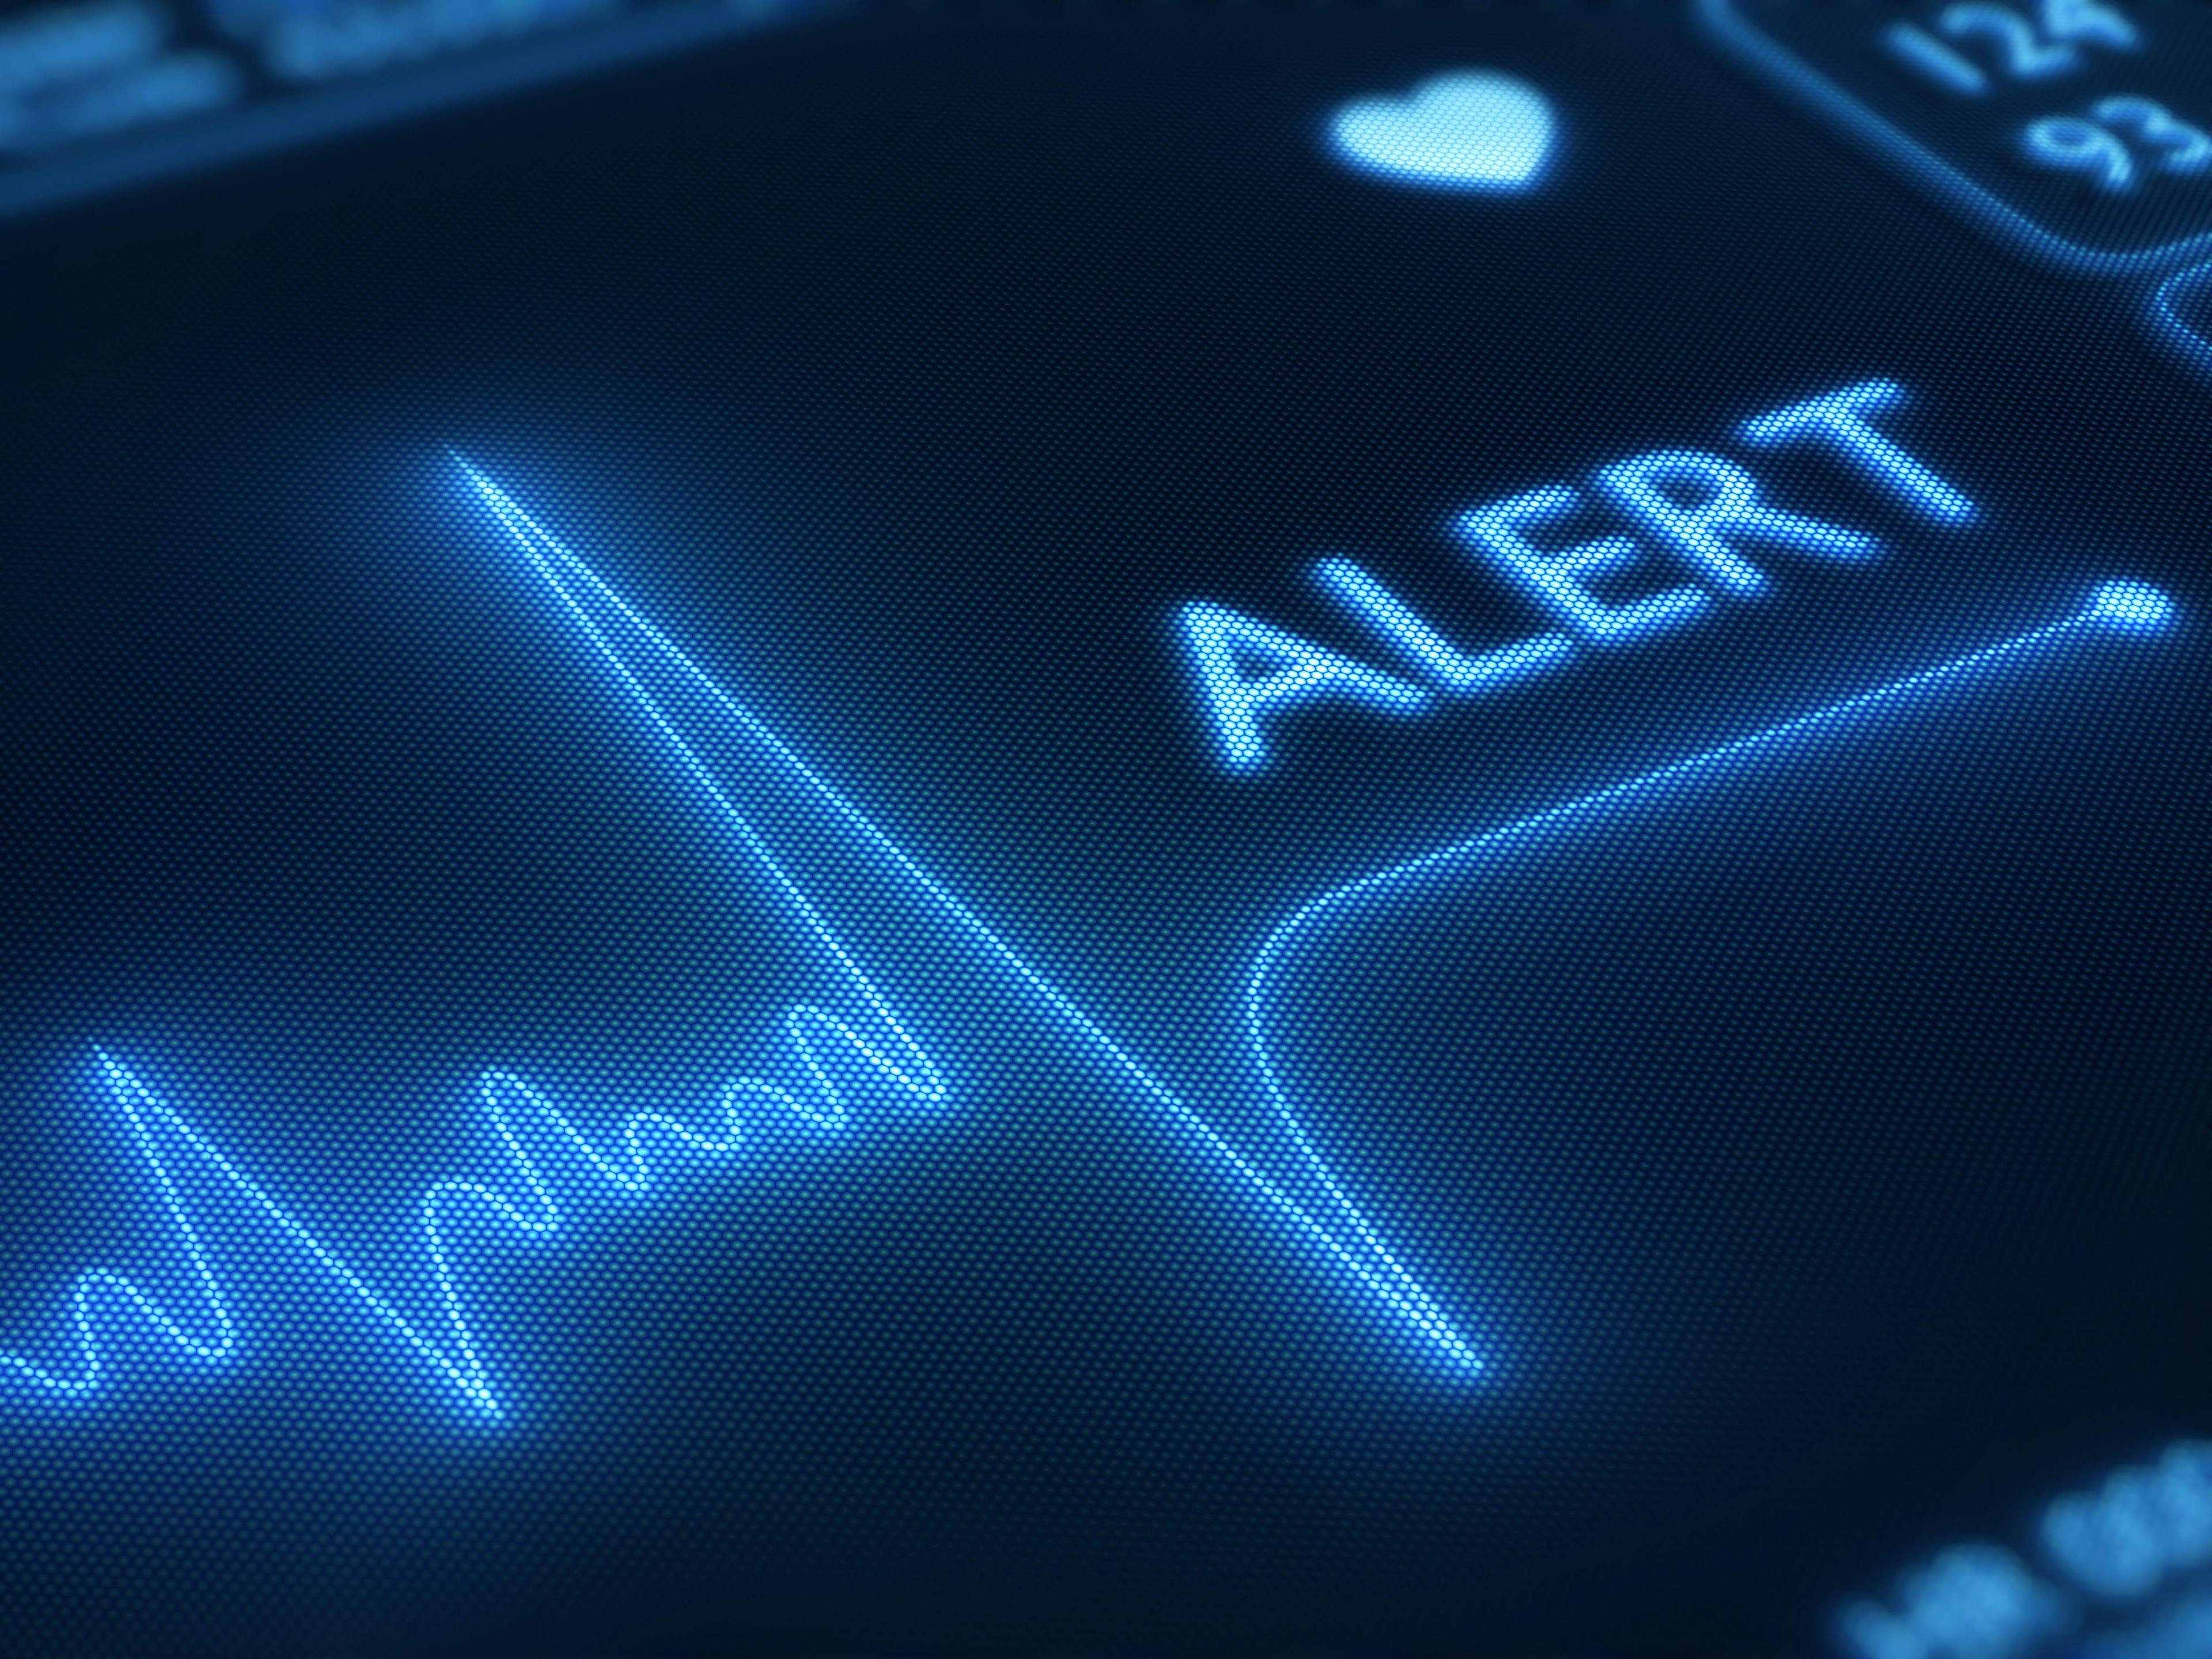 Heart Failure May Increase Cancer Risk